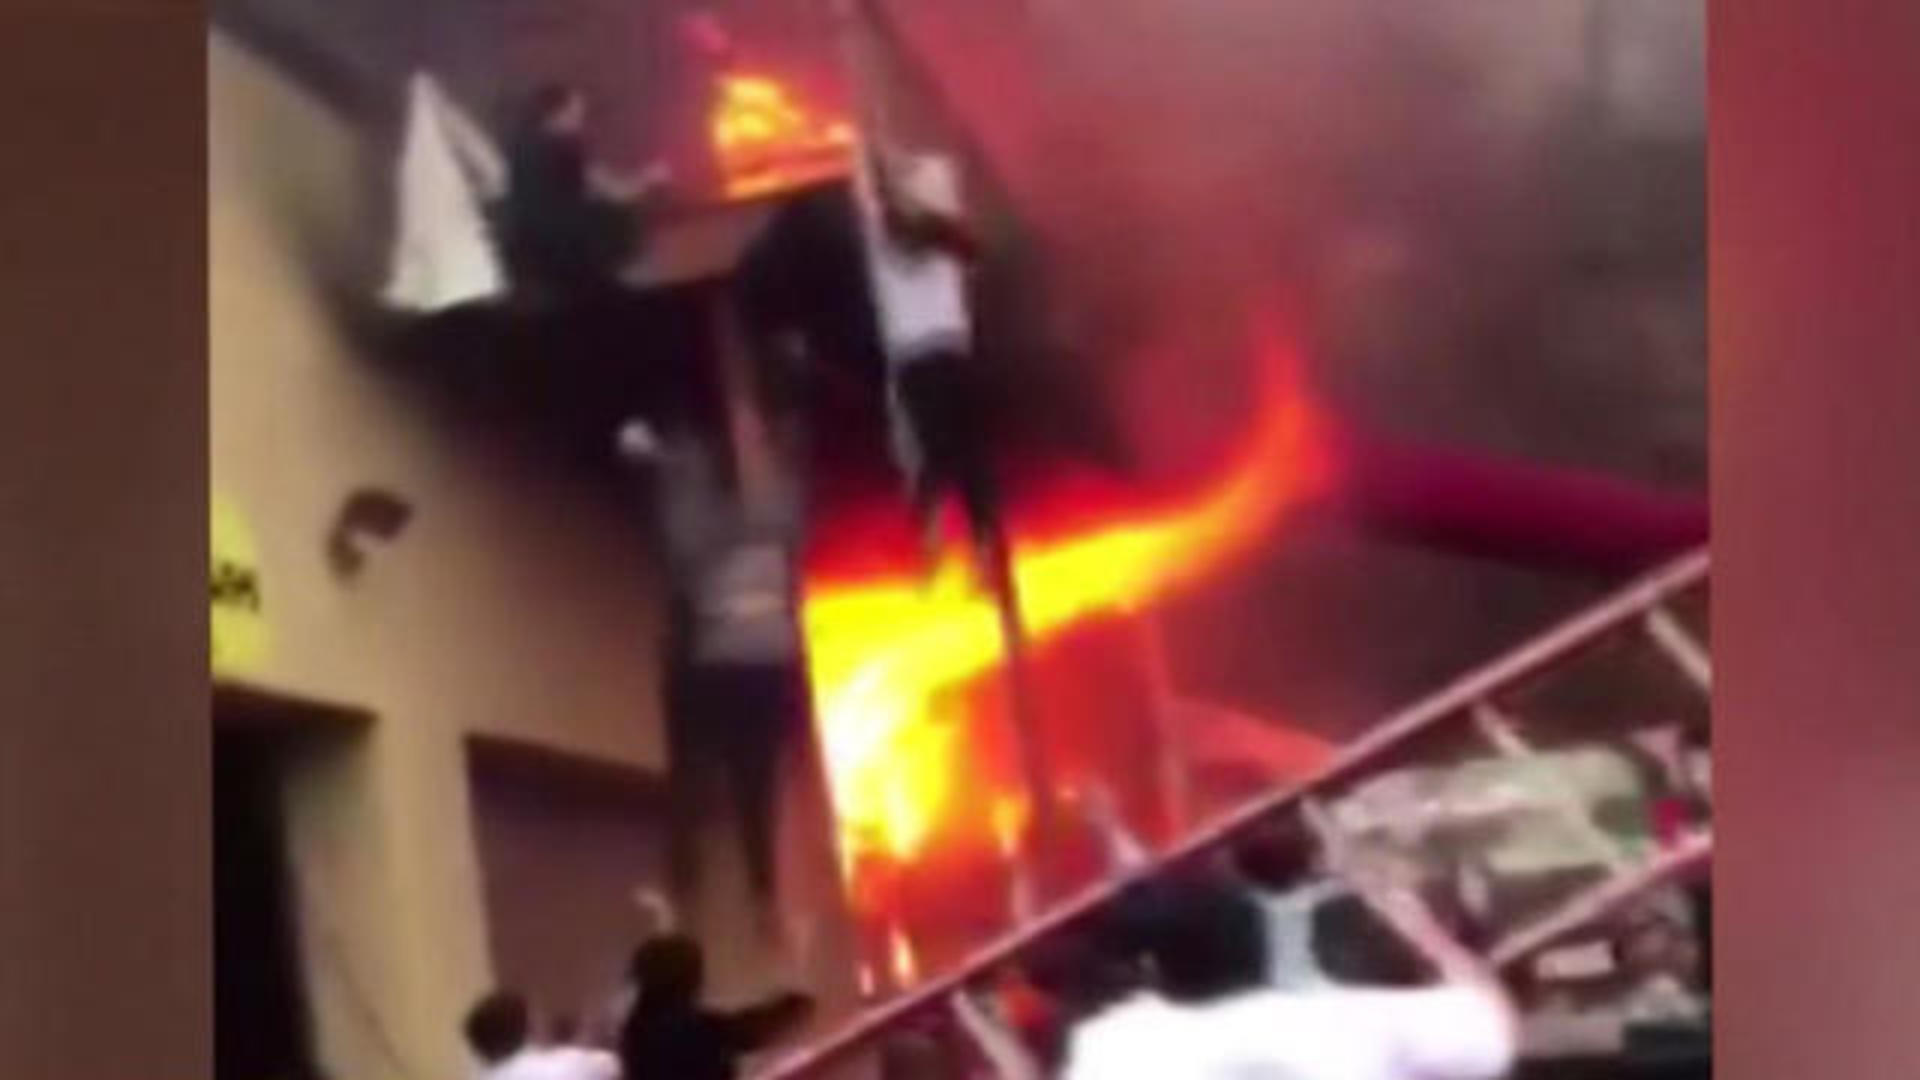 Girls jump from window of burning dance studio - CBS News